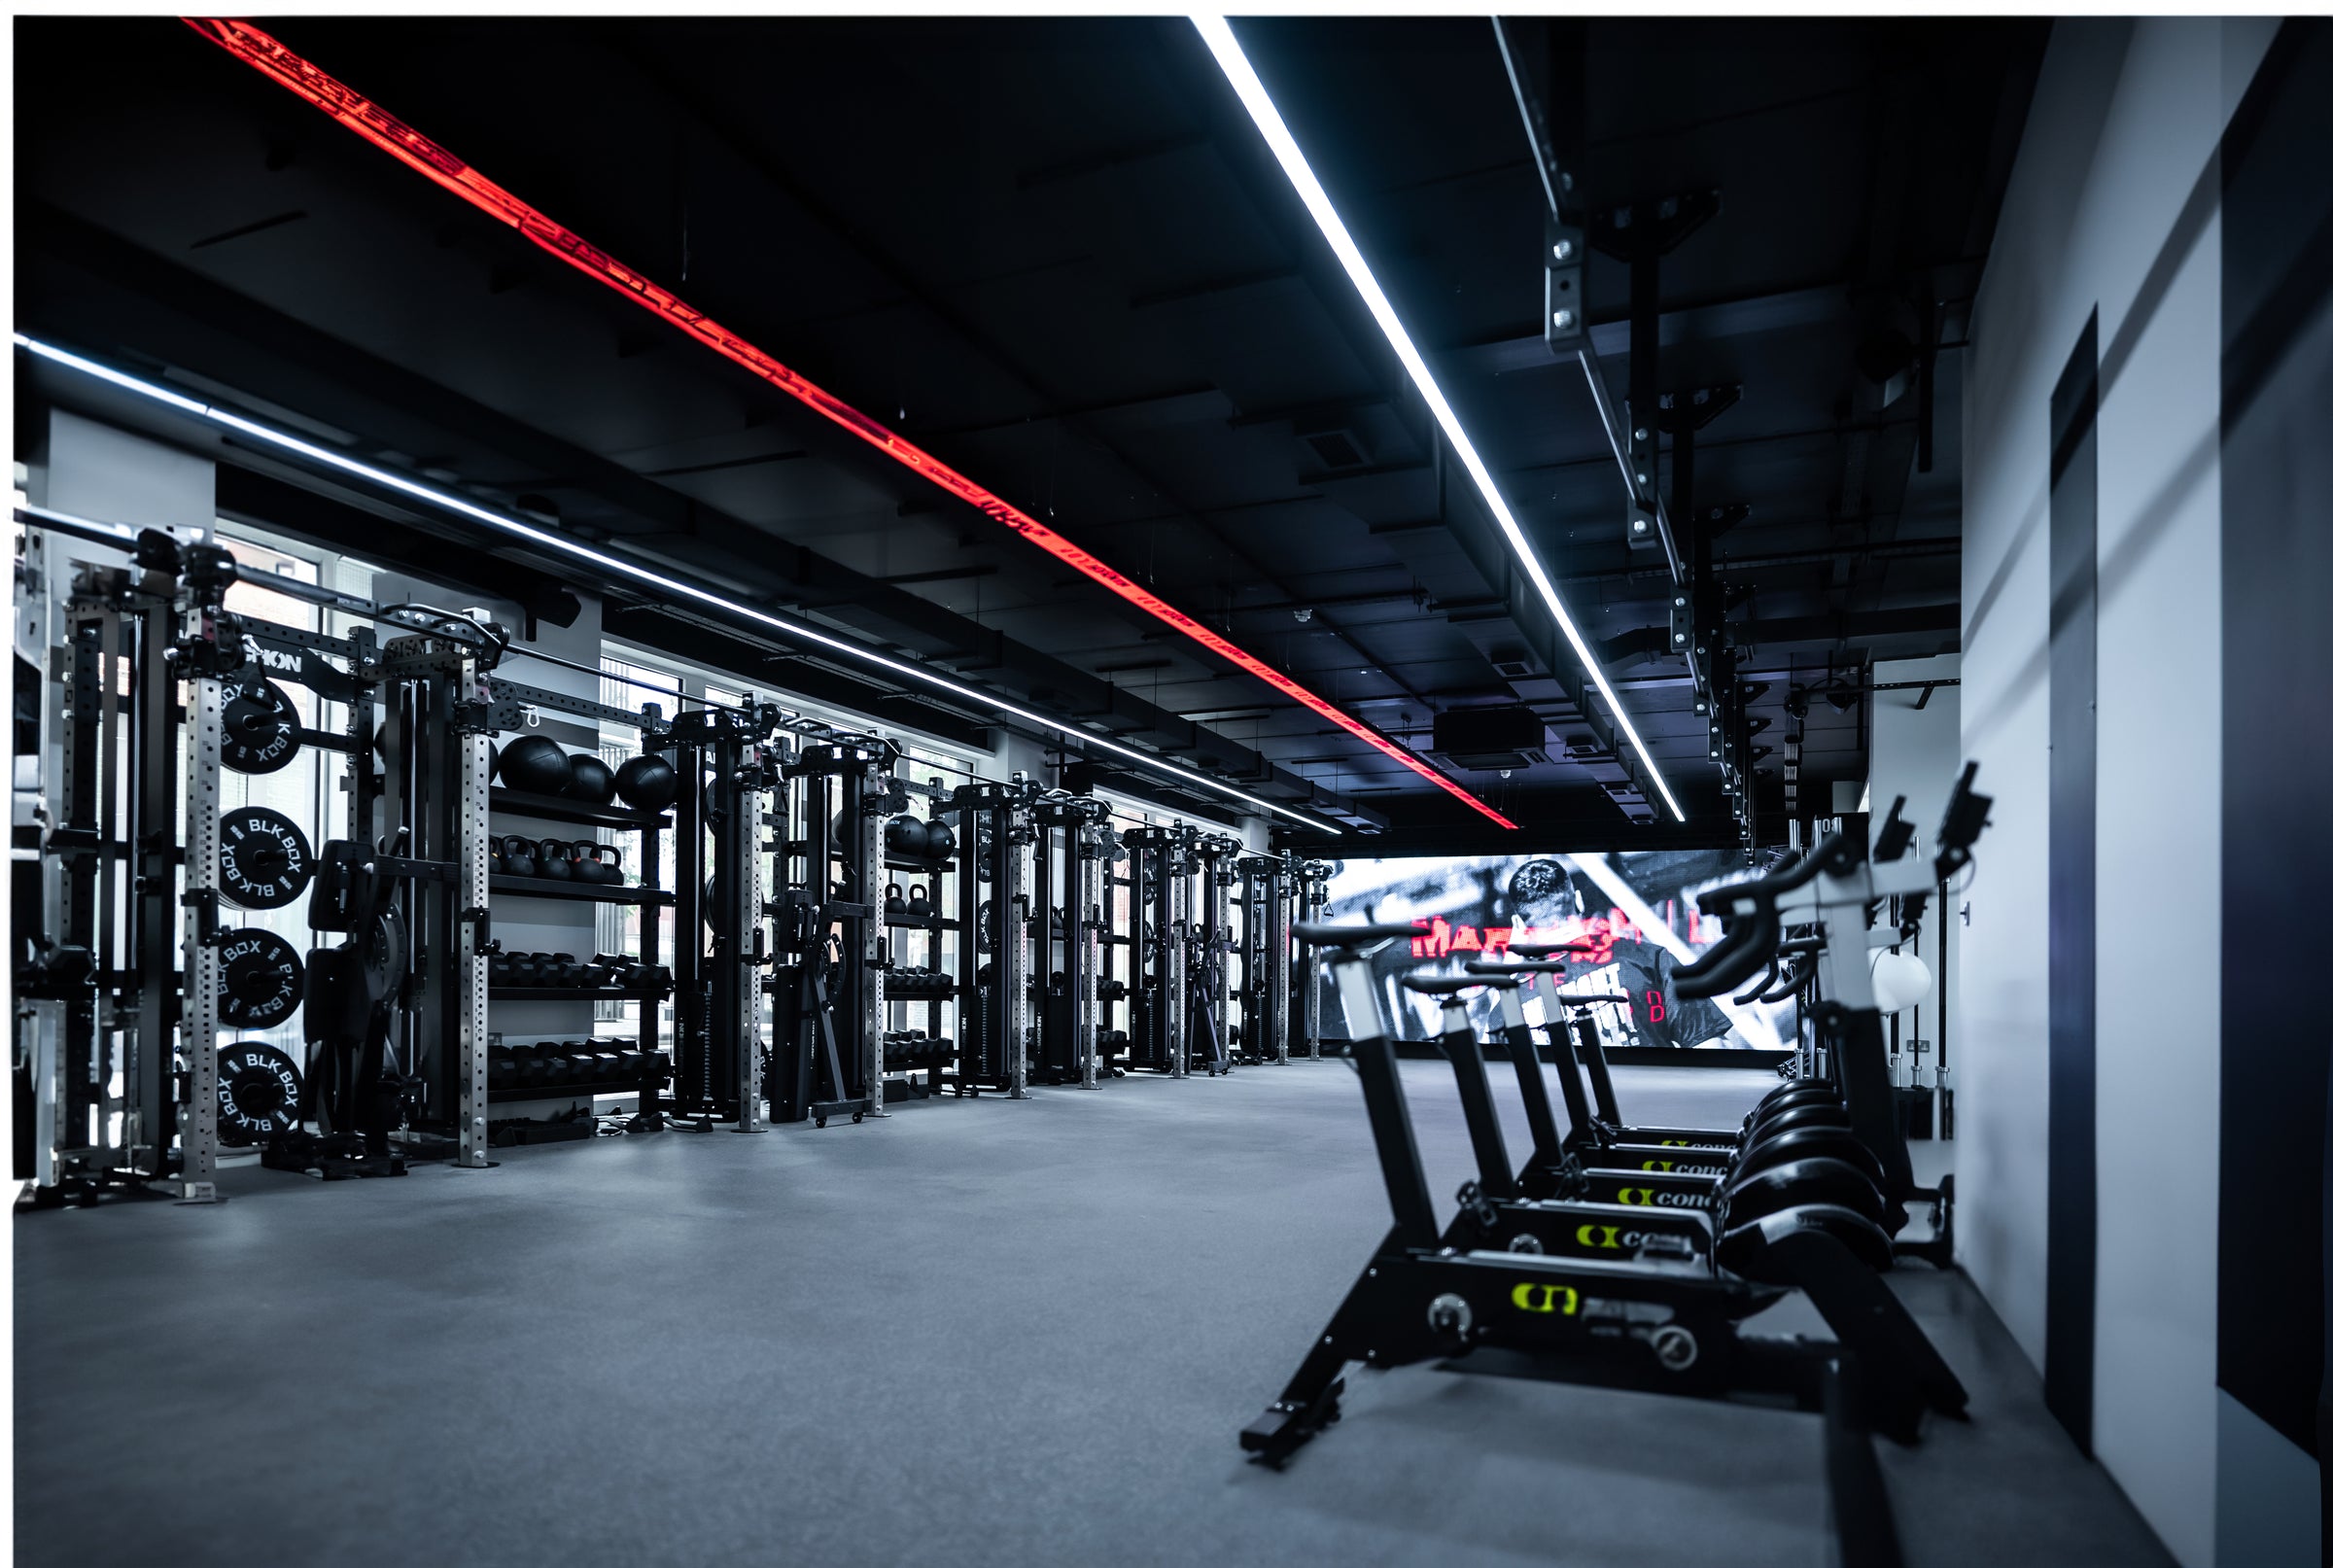 Gym Rig & Power Rack Storage